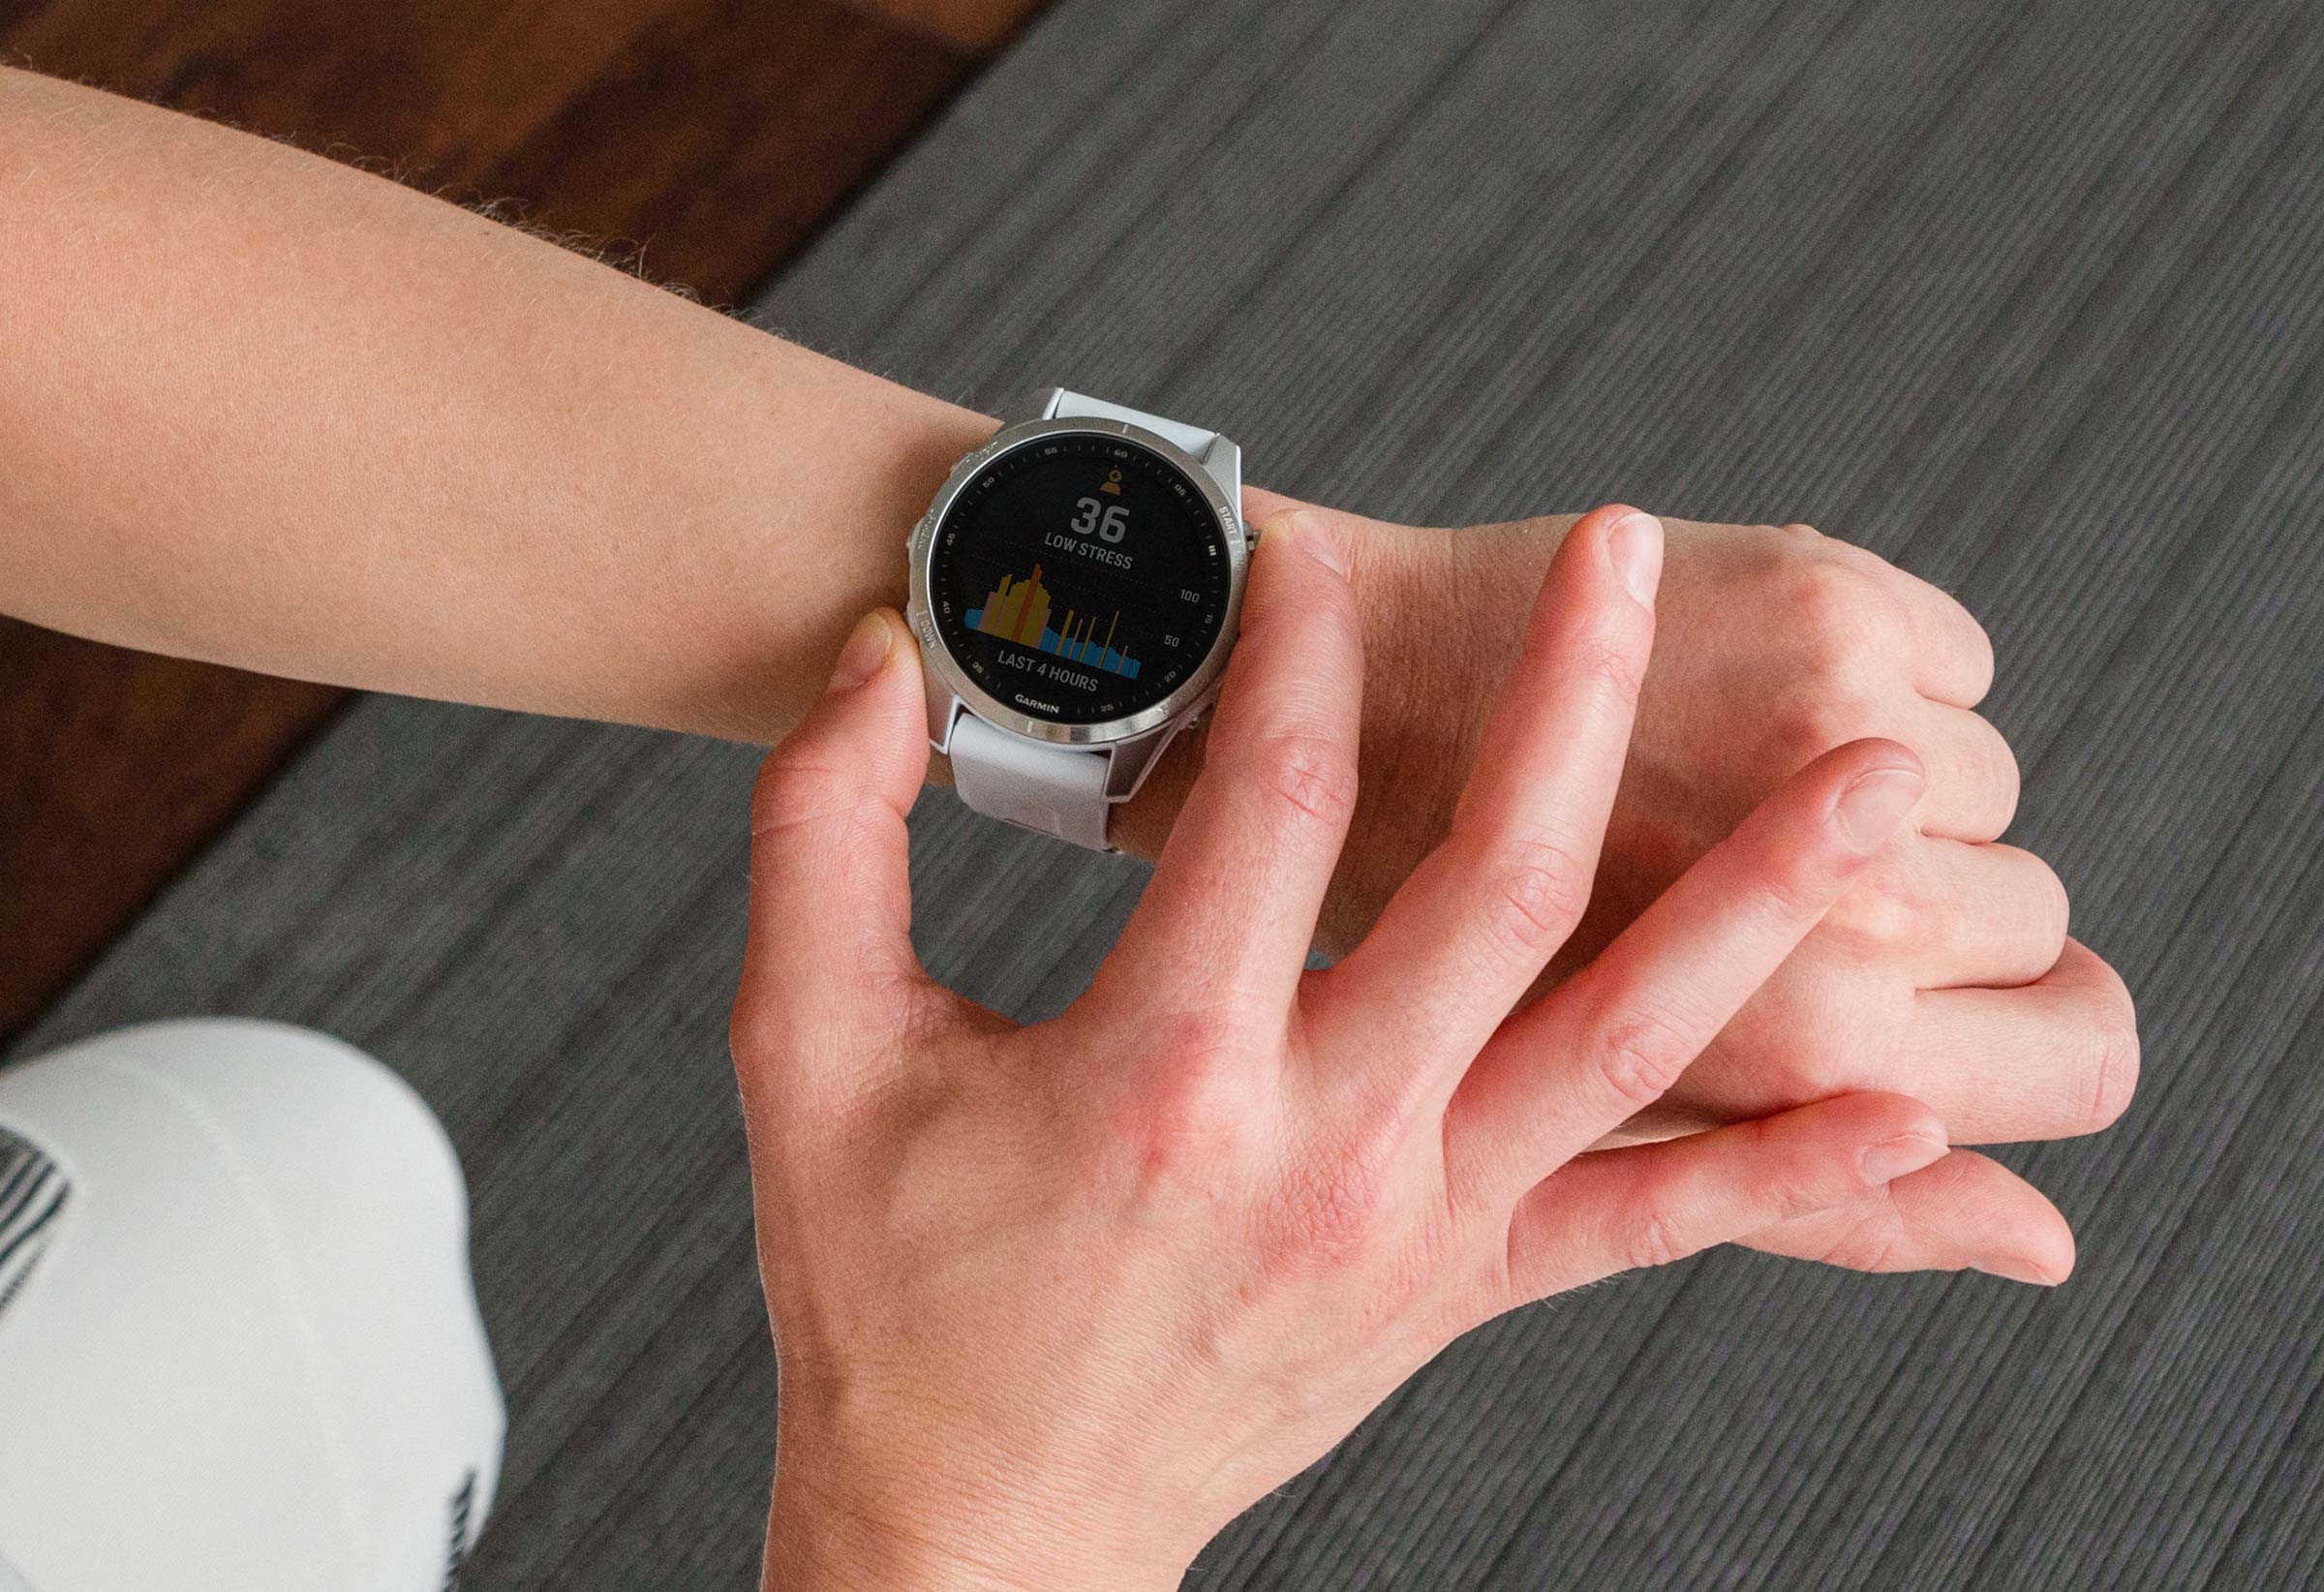 monitor stress levels with Garmin smartwatch. 